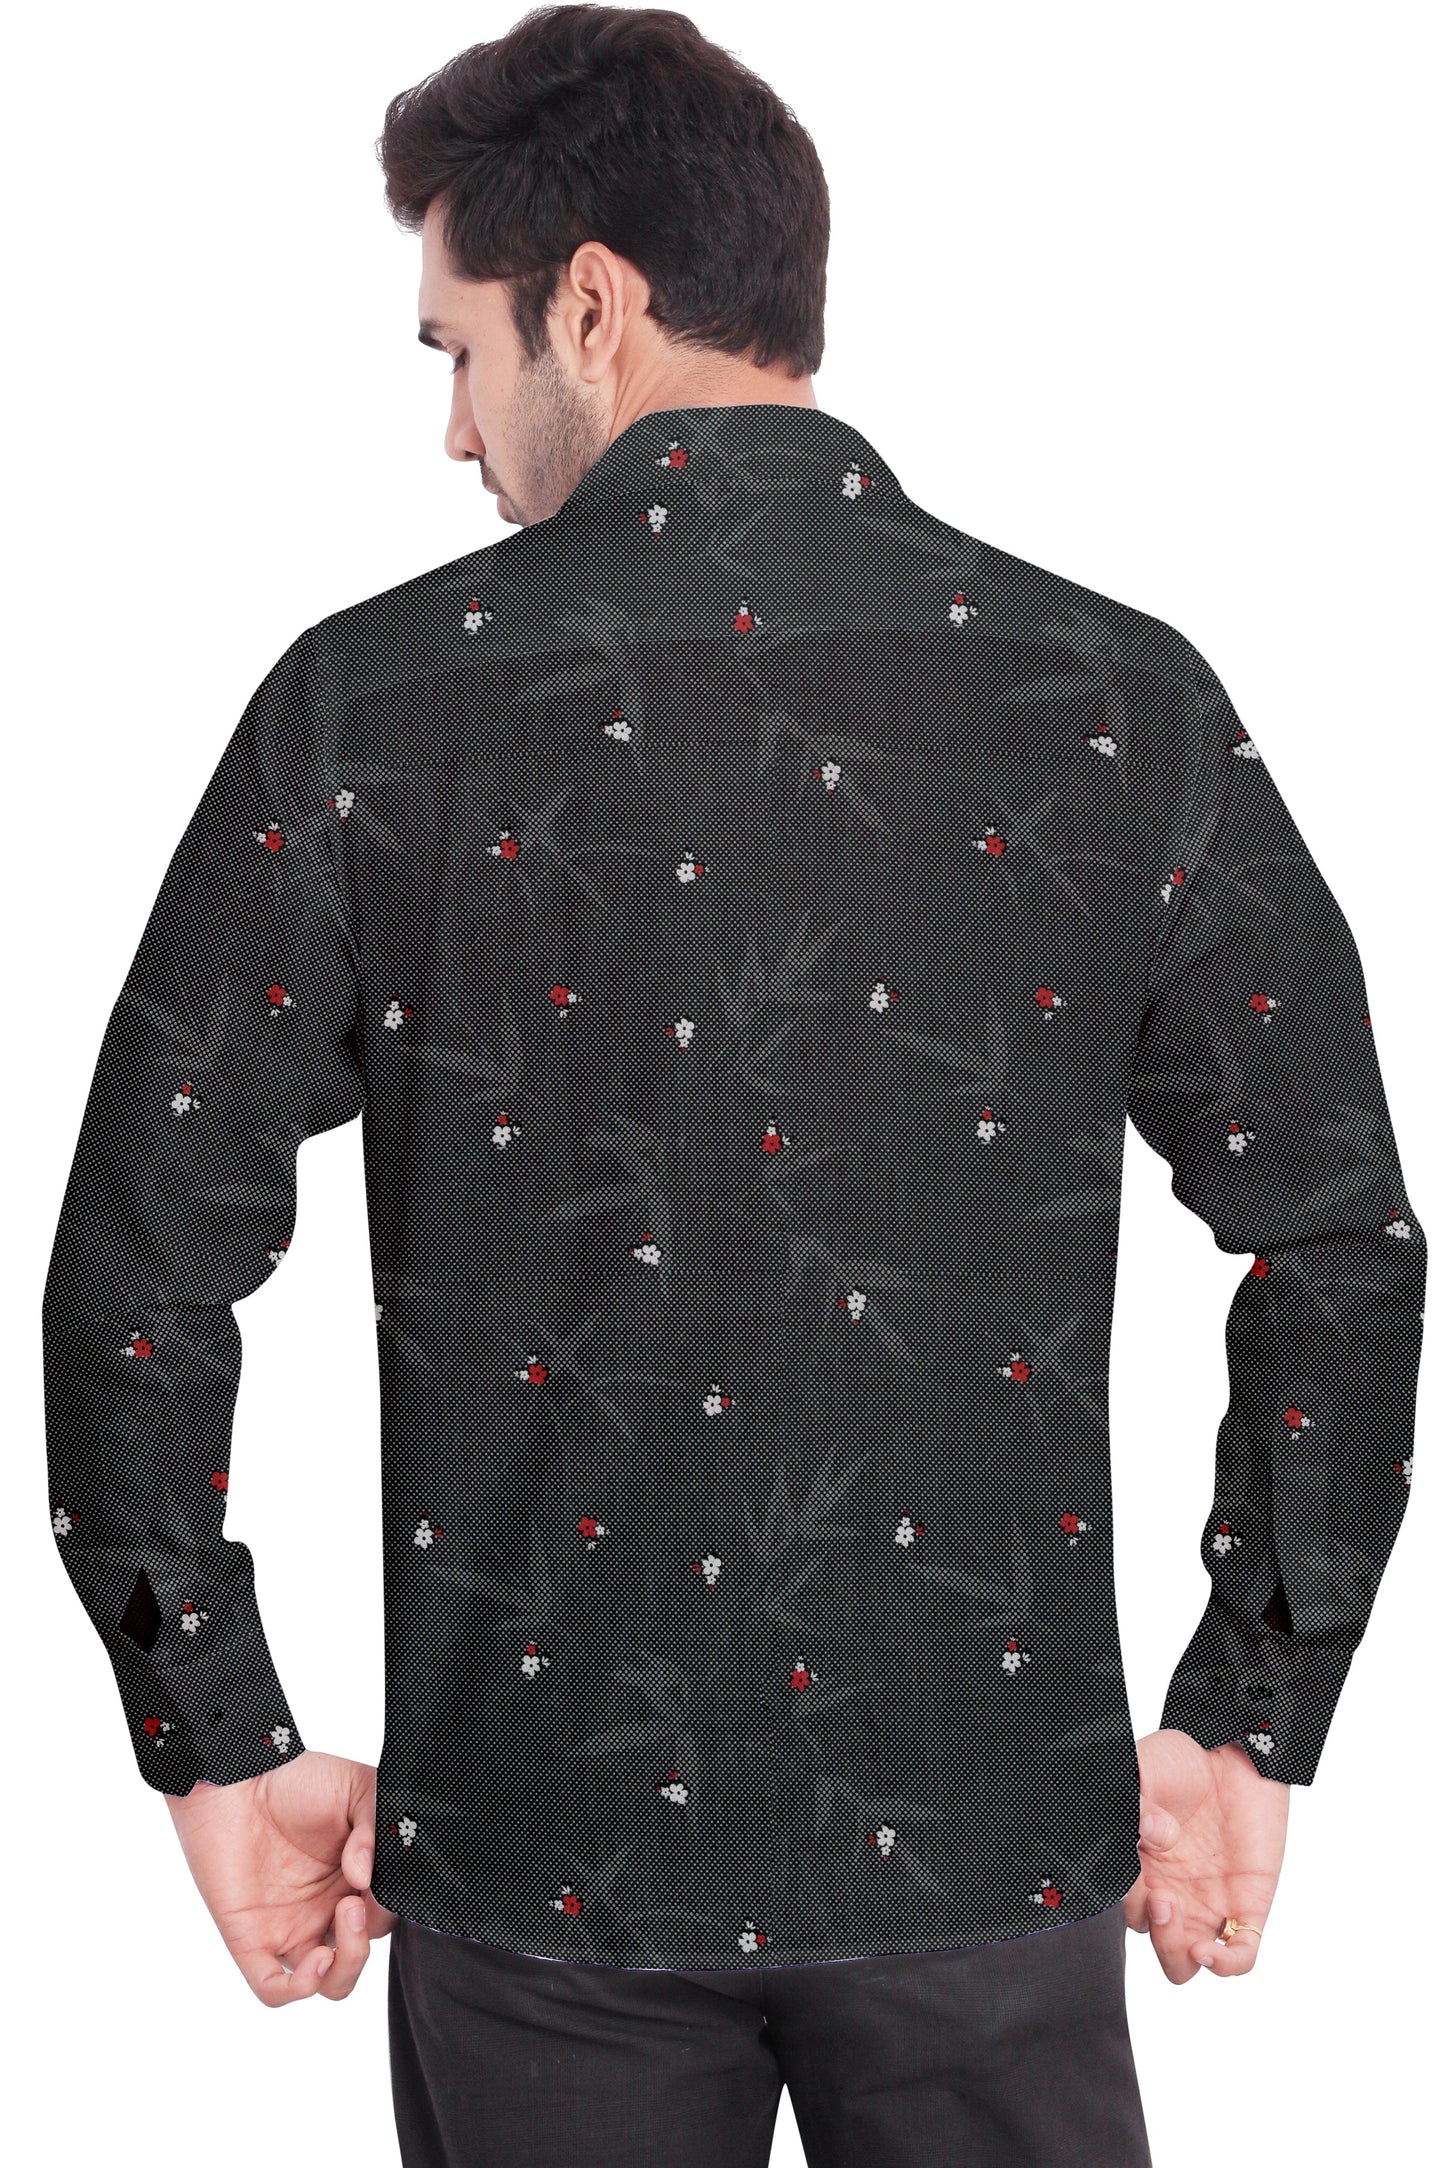 Men's Black Flower Printed Casual Shirt Full Sleeves 100% Cotton - Styleflea